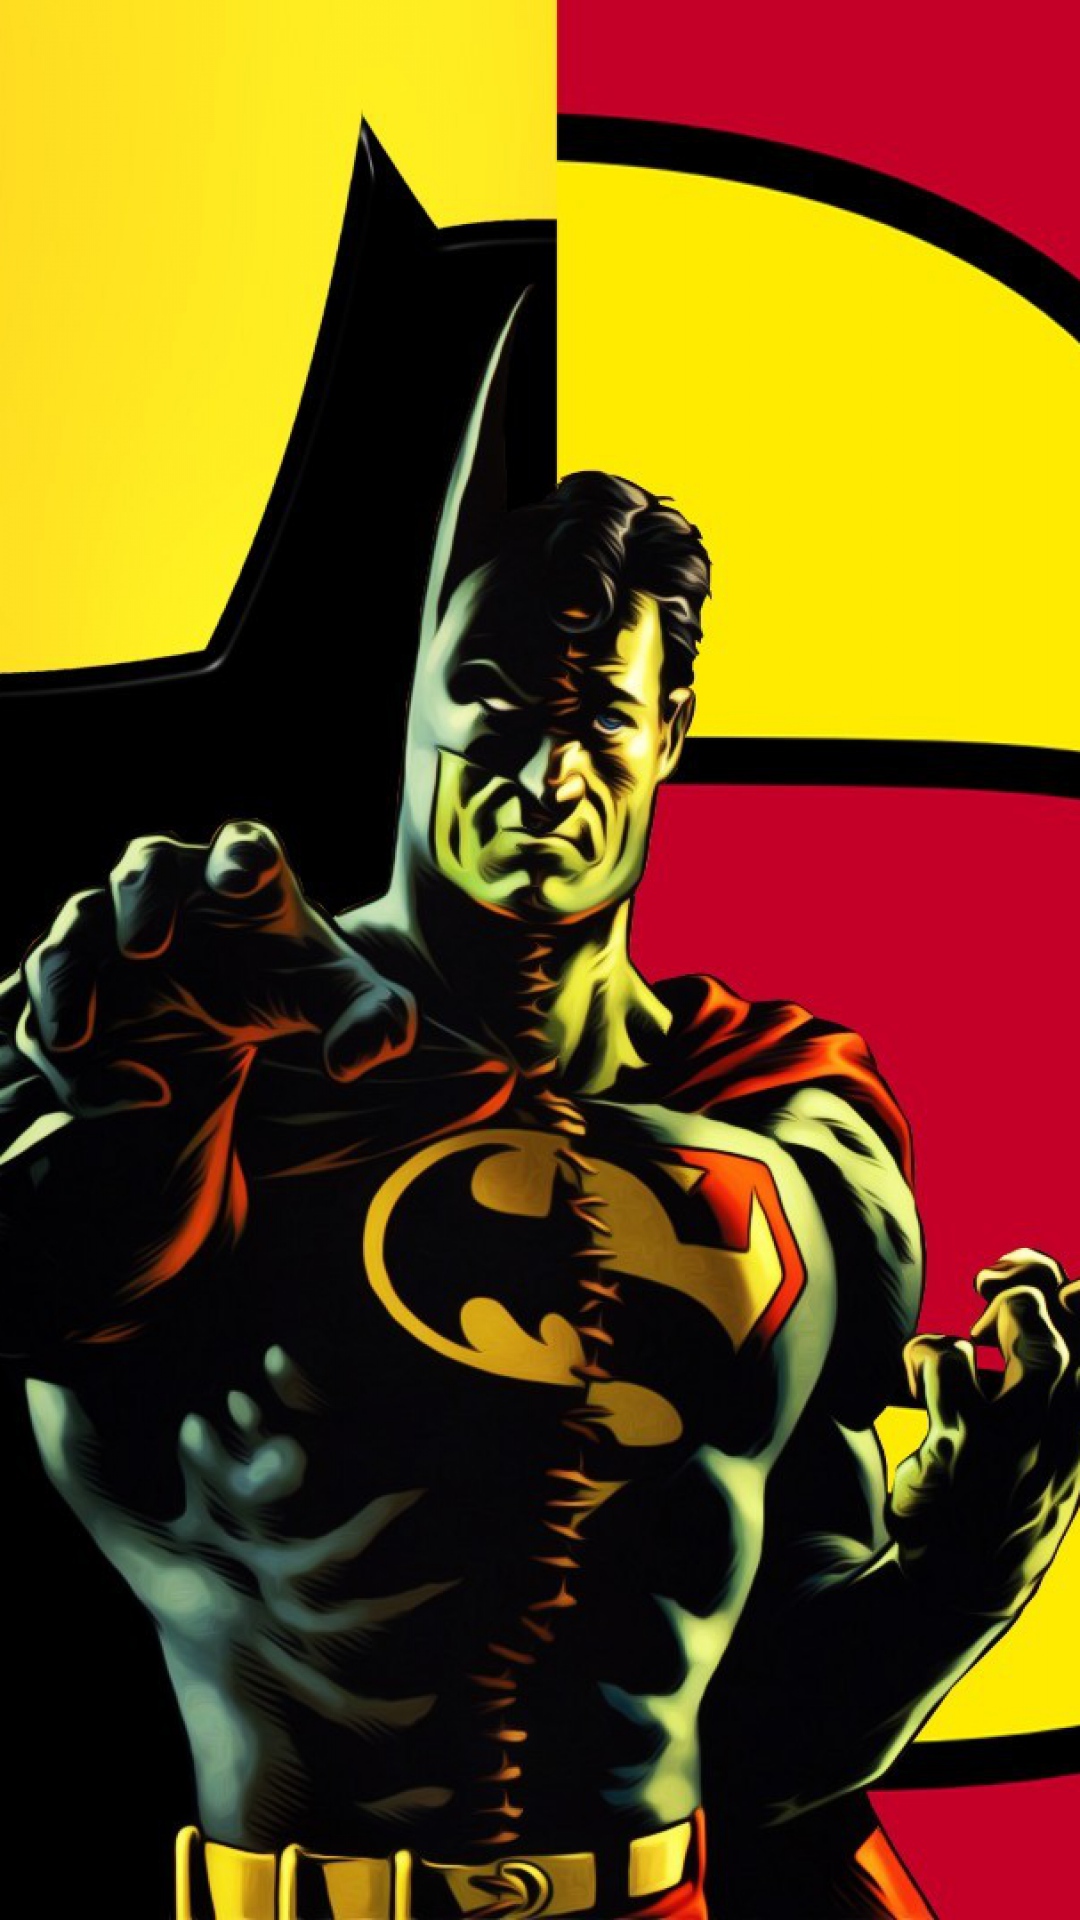 dc comics wallpaper iphone,fictional character,superhero,batman,hero,justice league